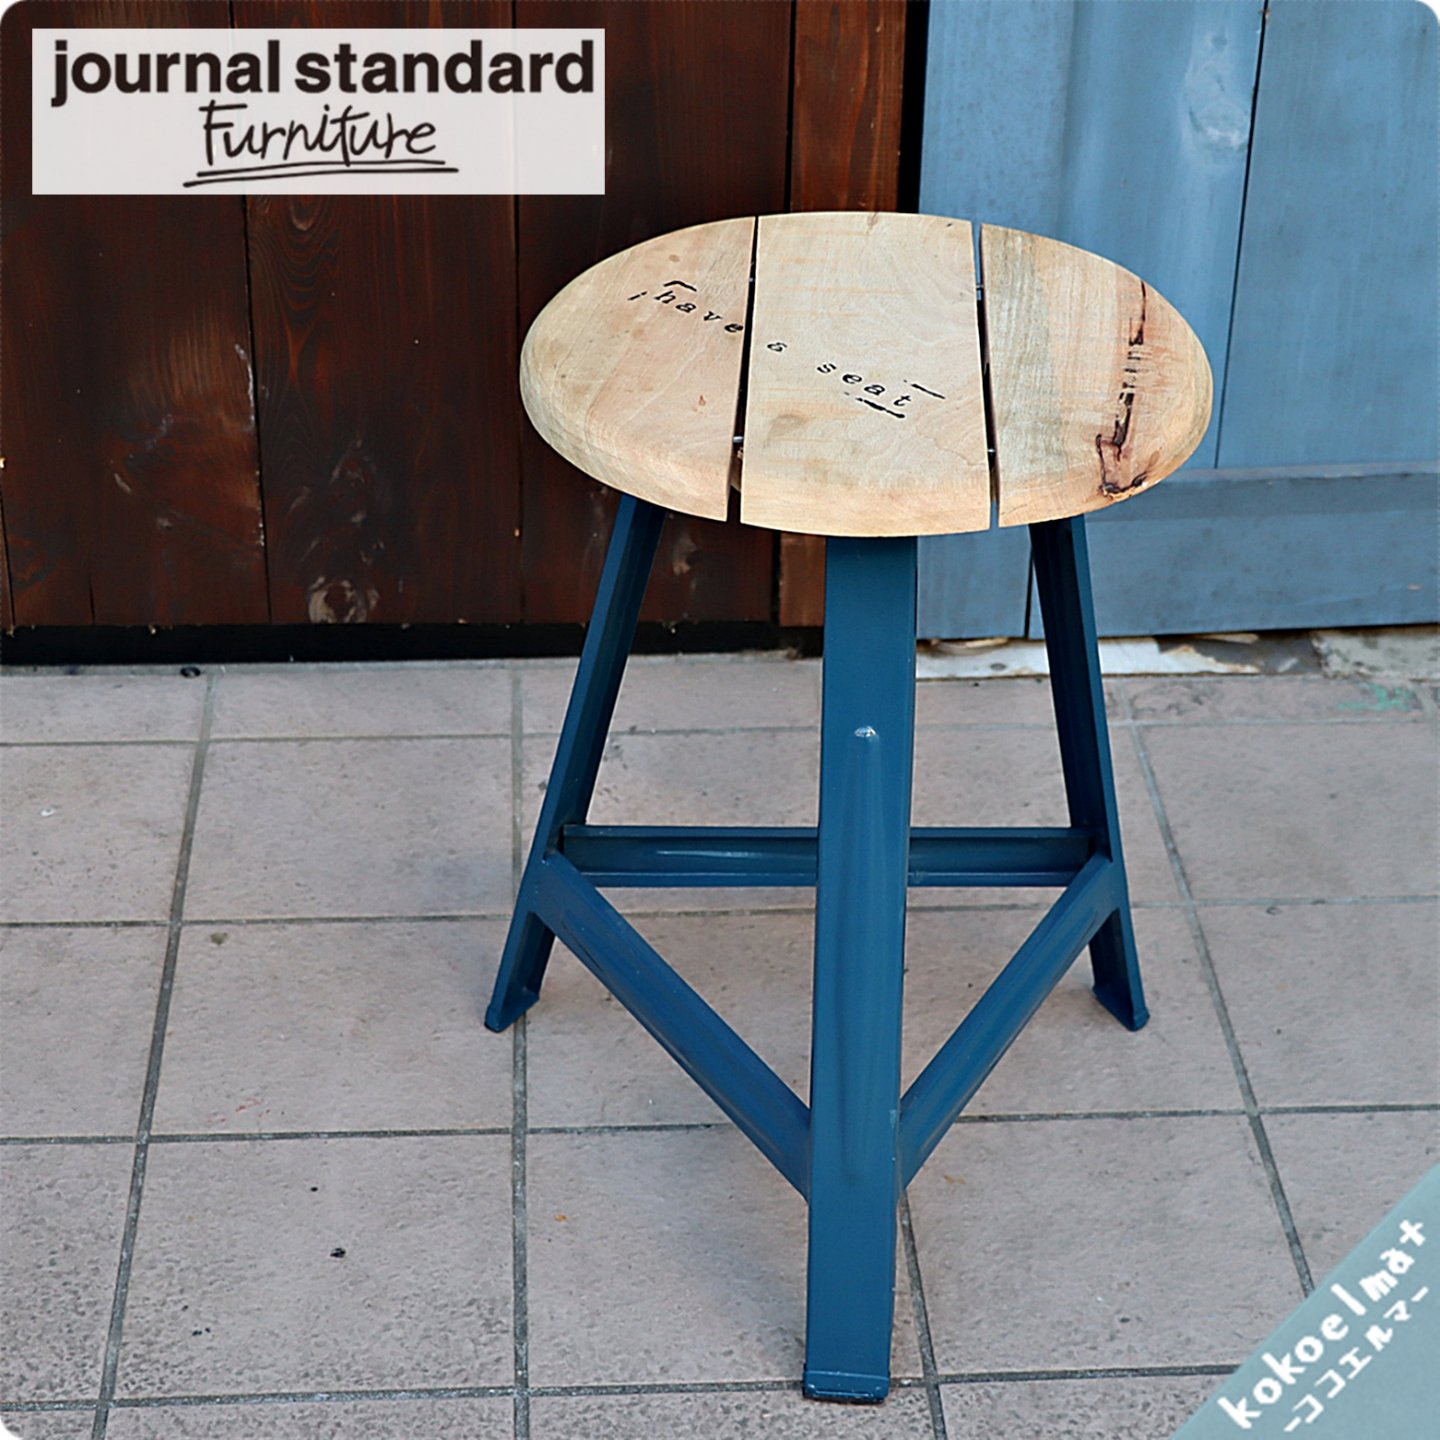 journal standard(ジャーナルスタンダードファニチャー)のスツールです 